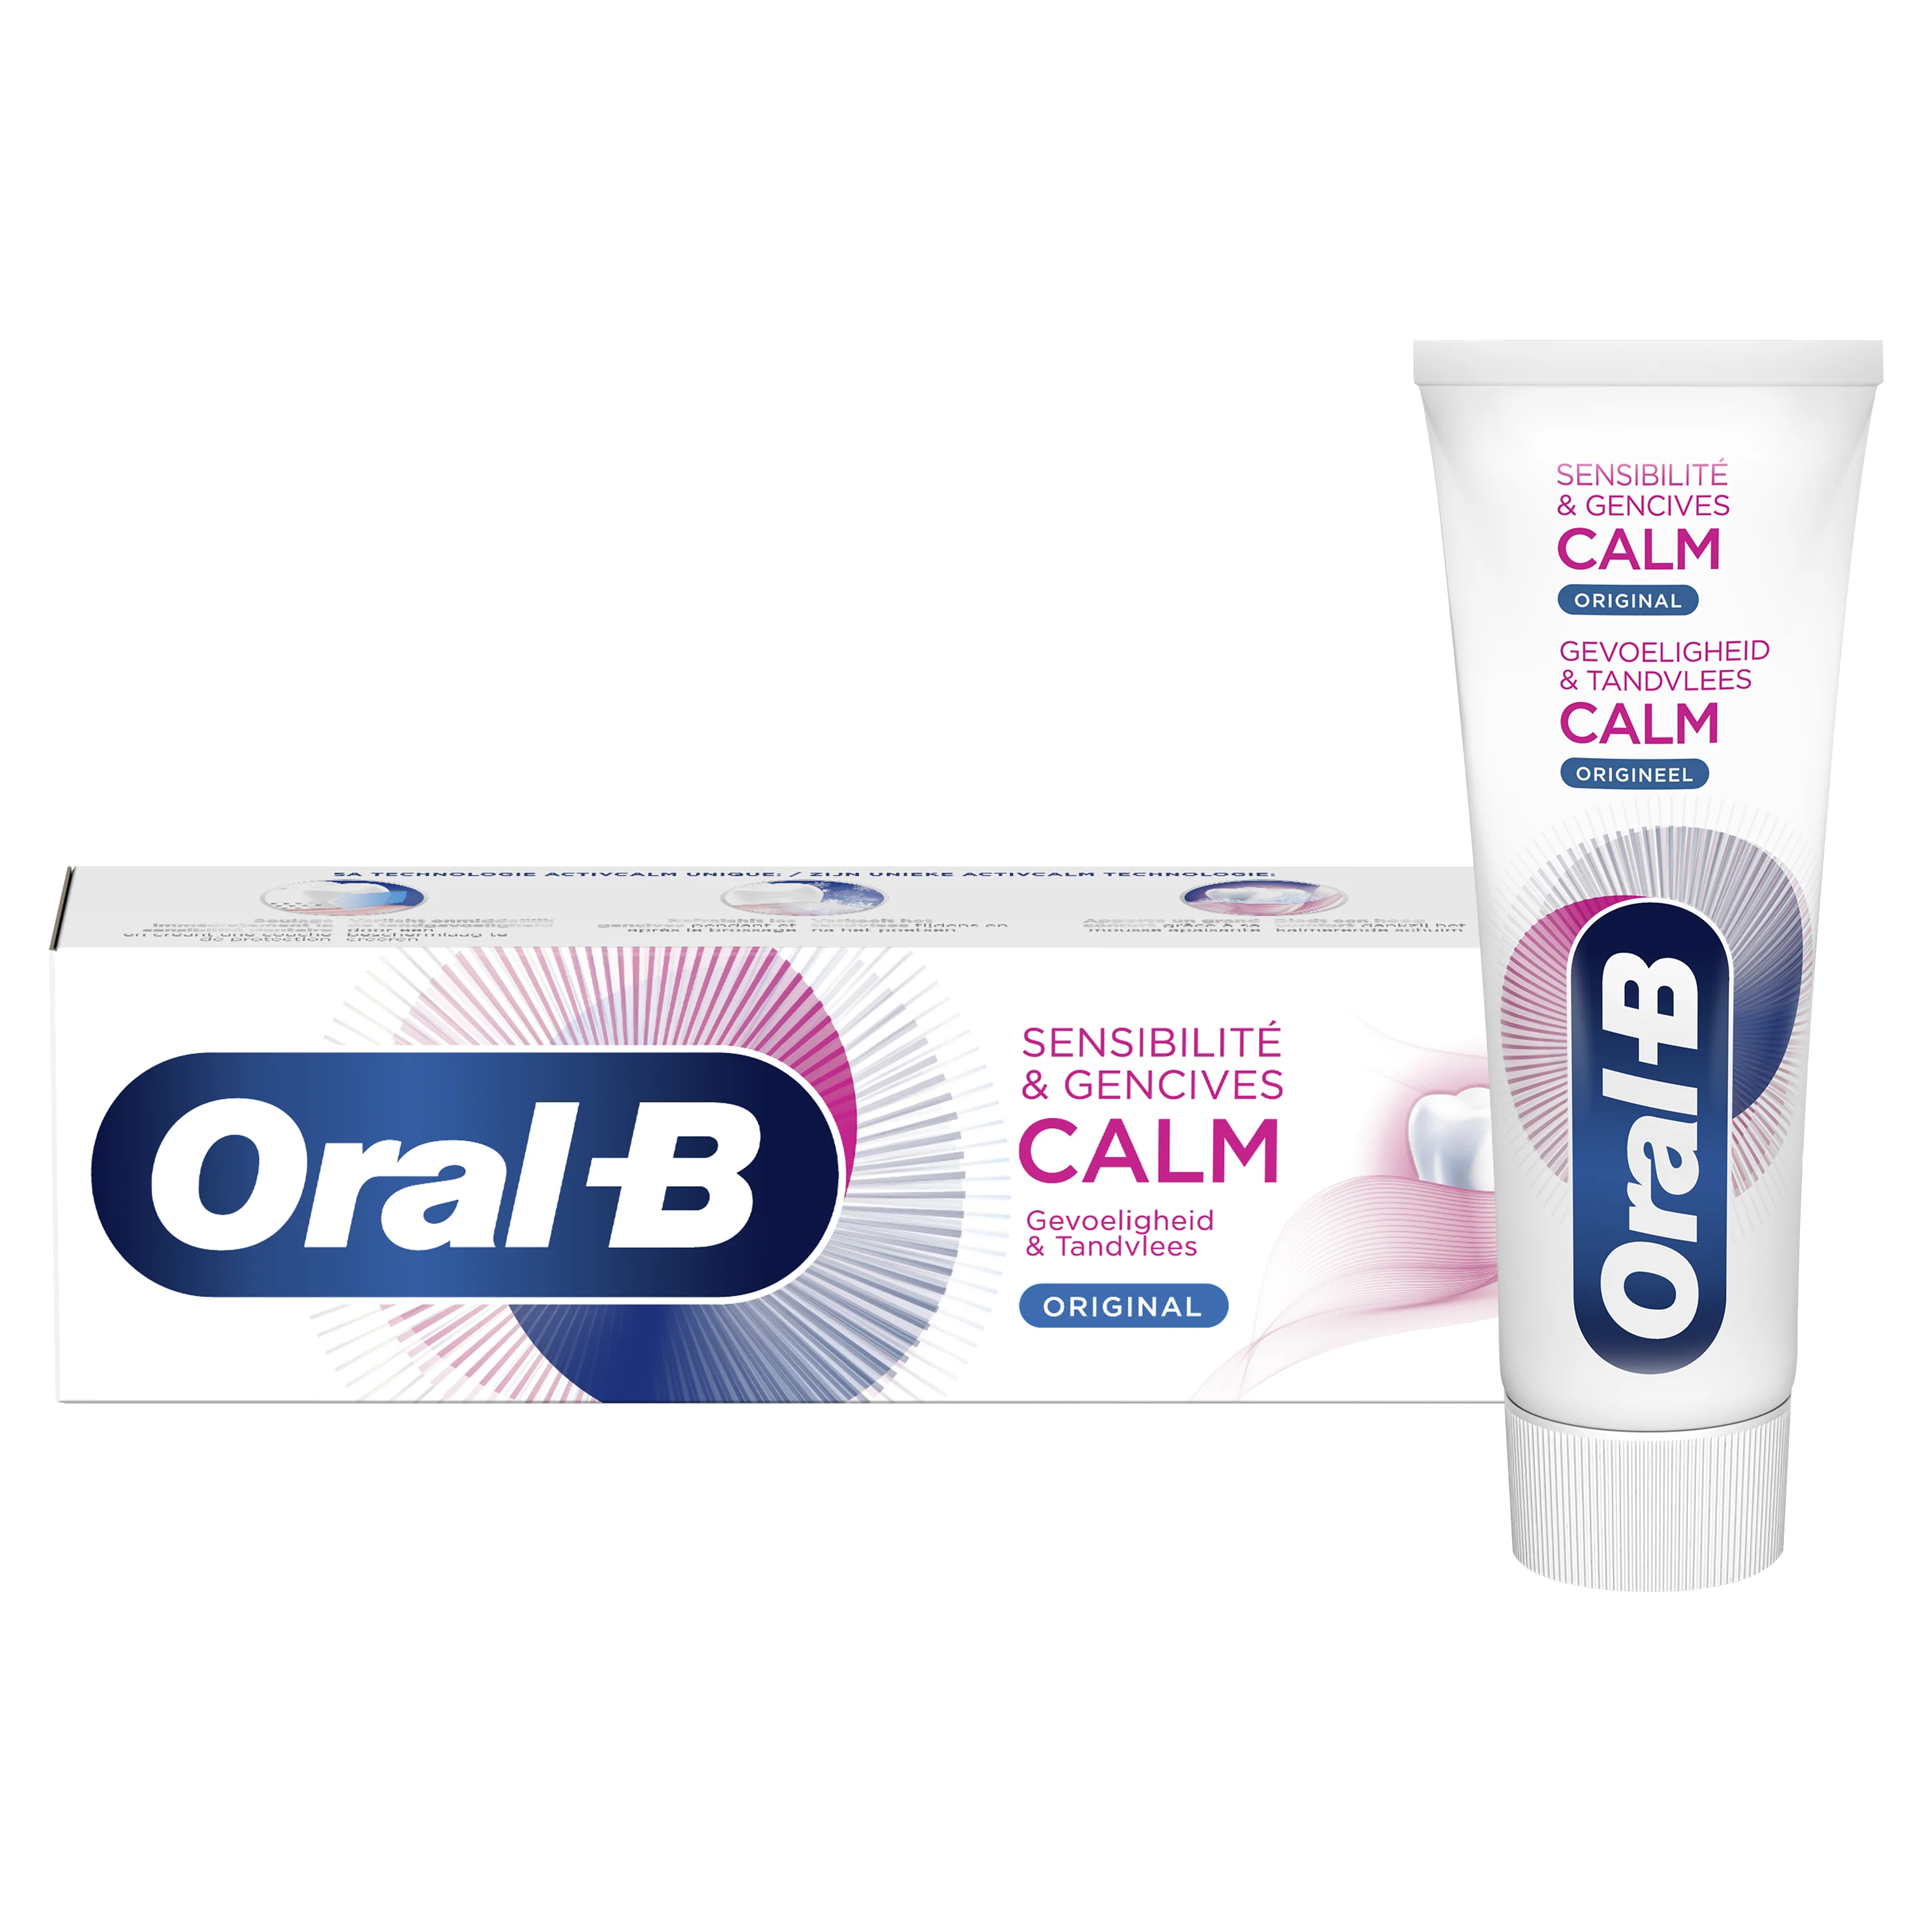 Oral-B Sensibilité & Gencives Calm Original Dentifrice undefined